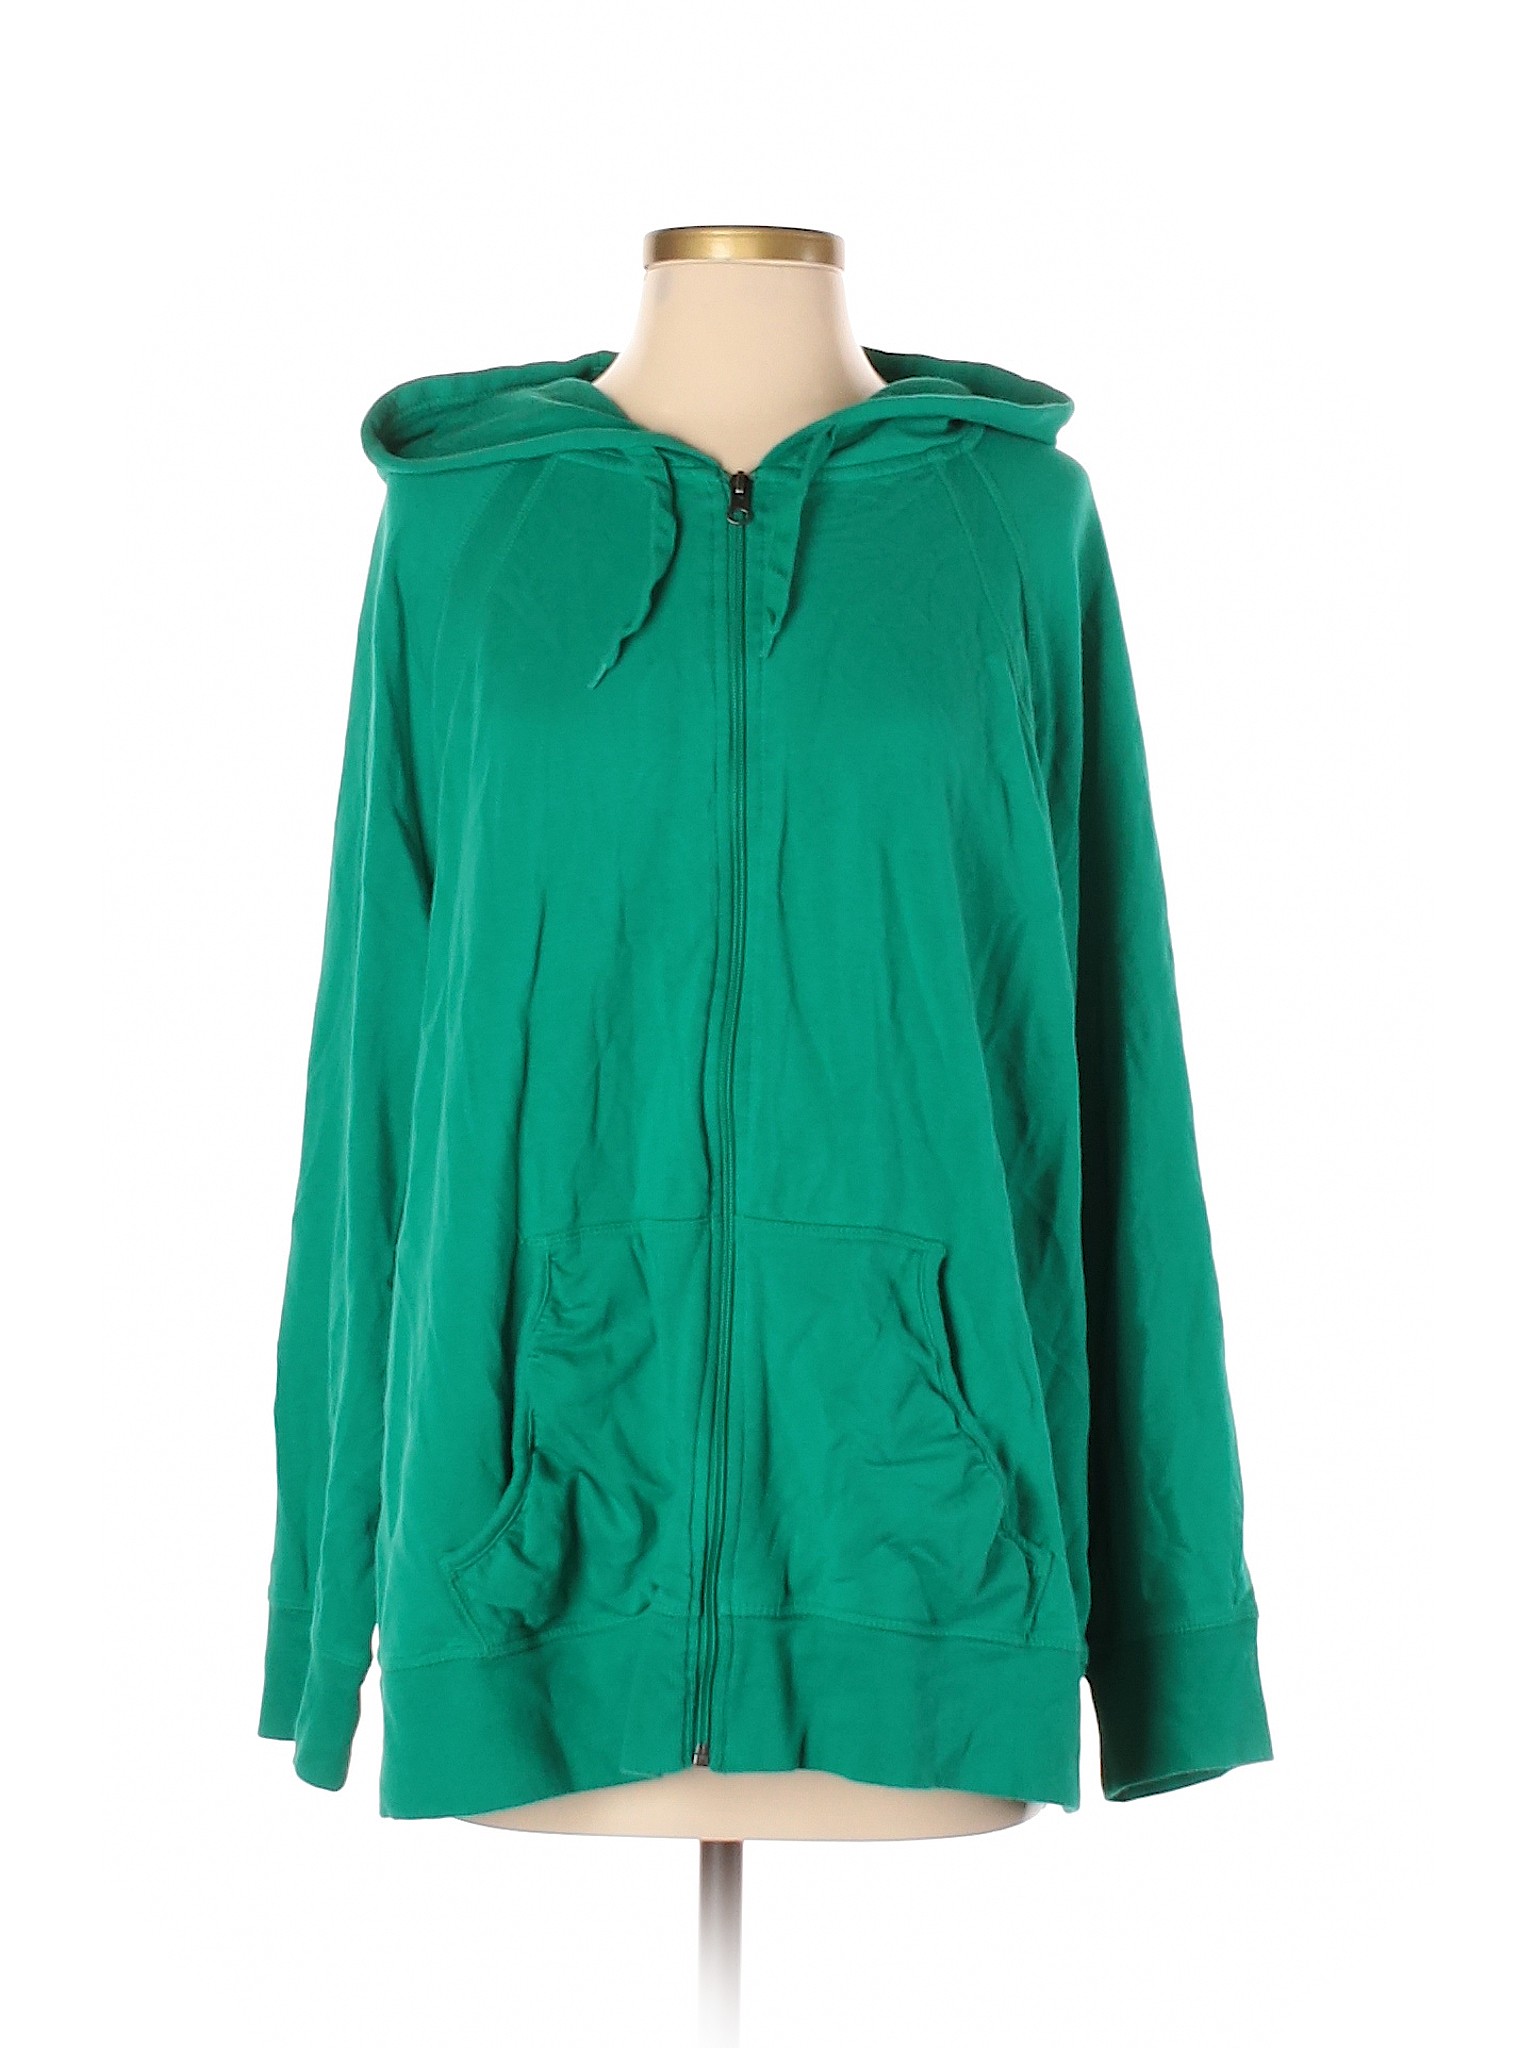 Merona 100% Cotton Solid Green Zip Up Hoodie Size 2 (Plus) - 75% off ...